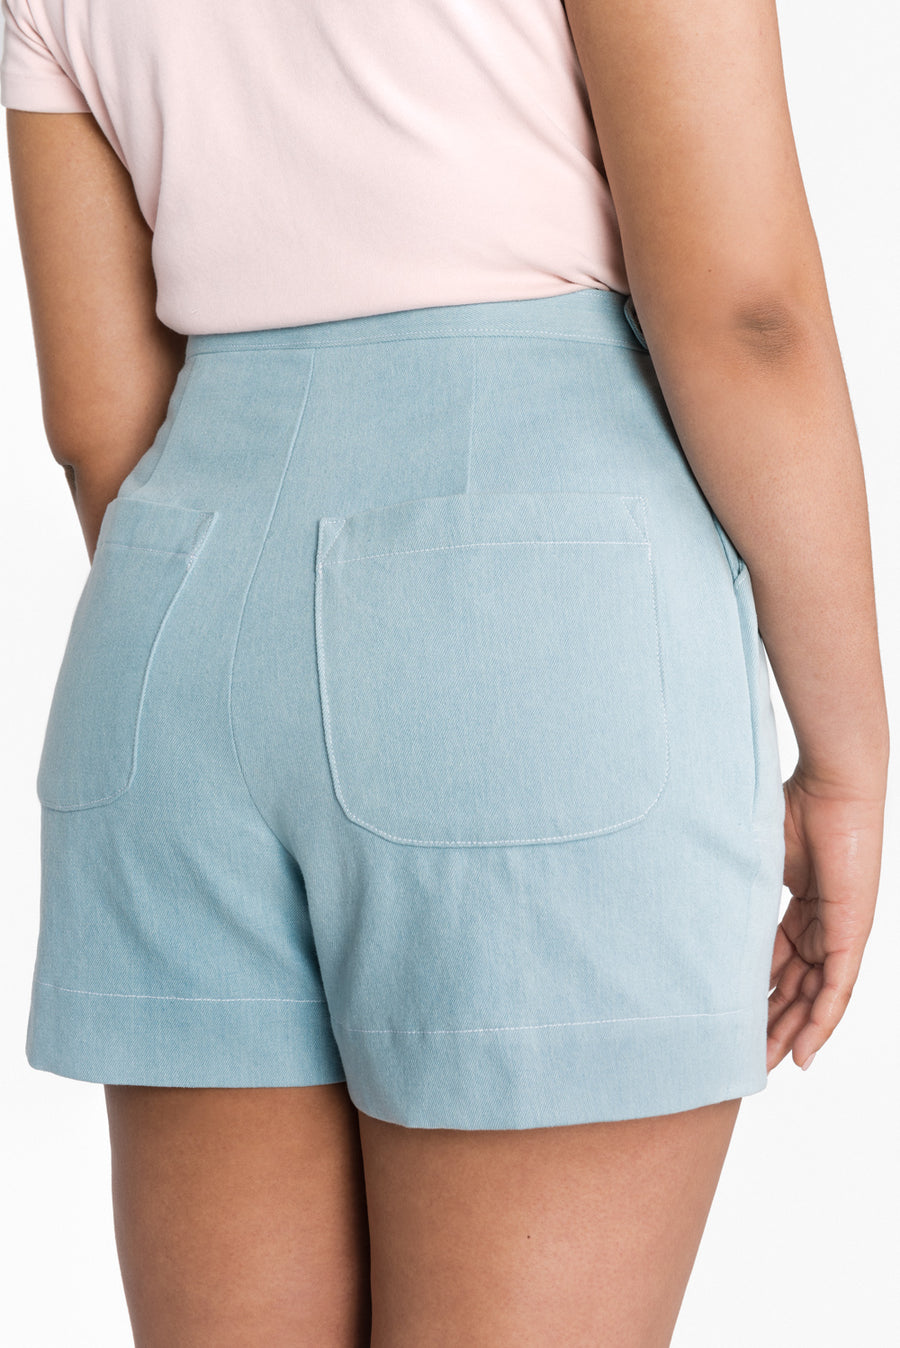 Jenny Overalls + Trouser Pattern (WHOLESALE)